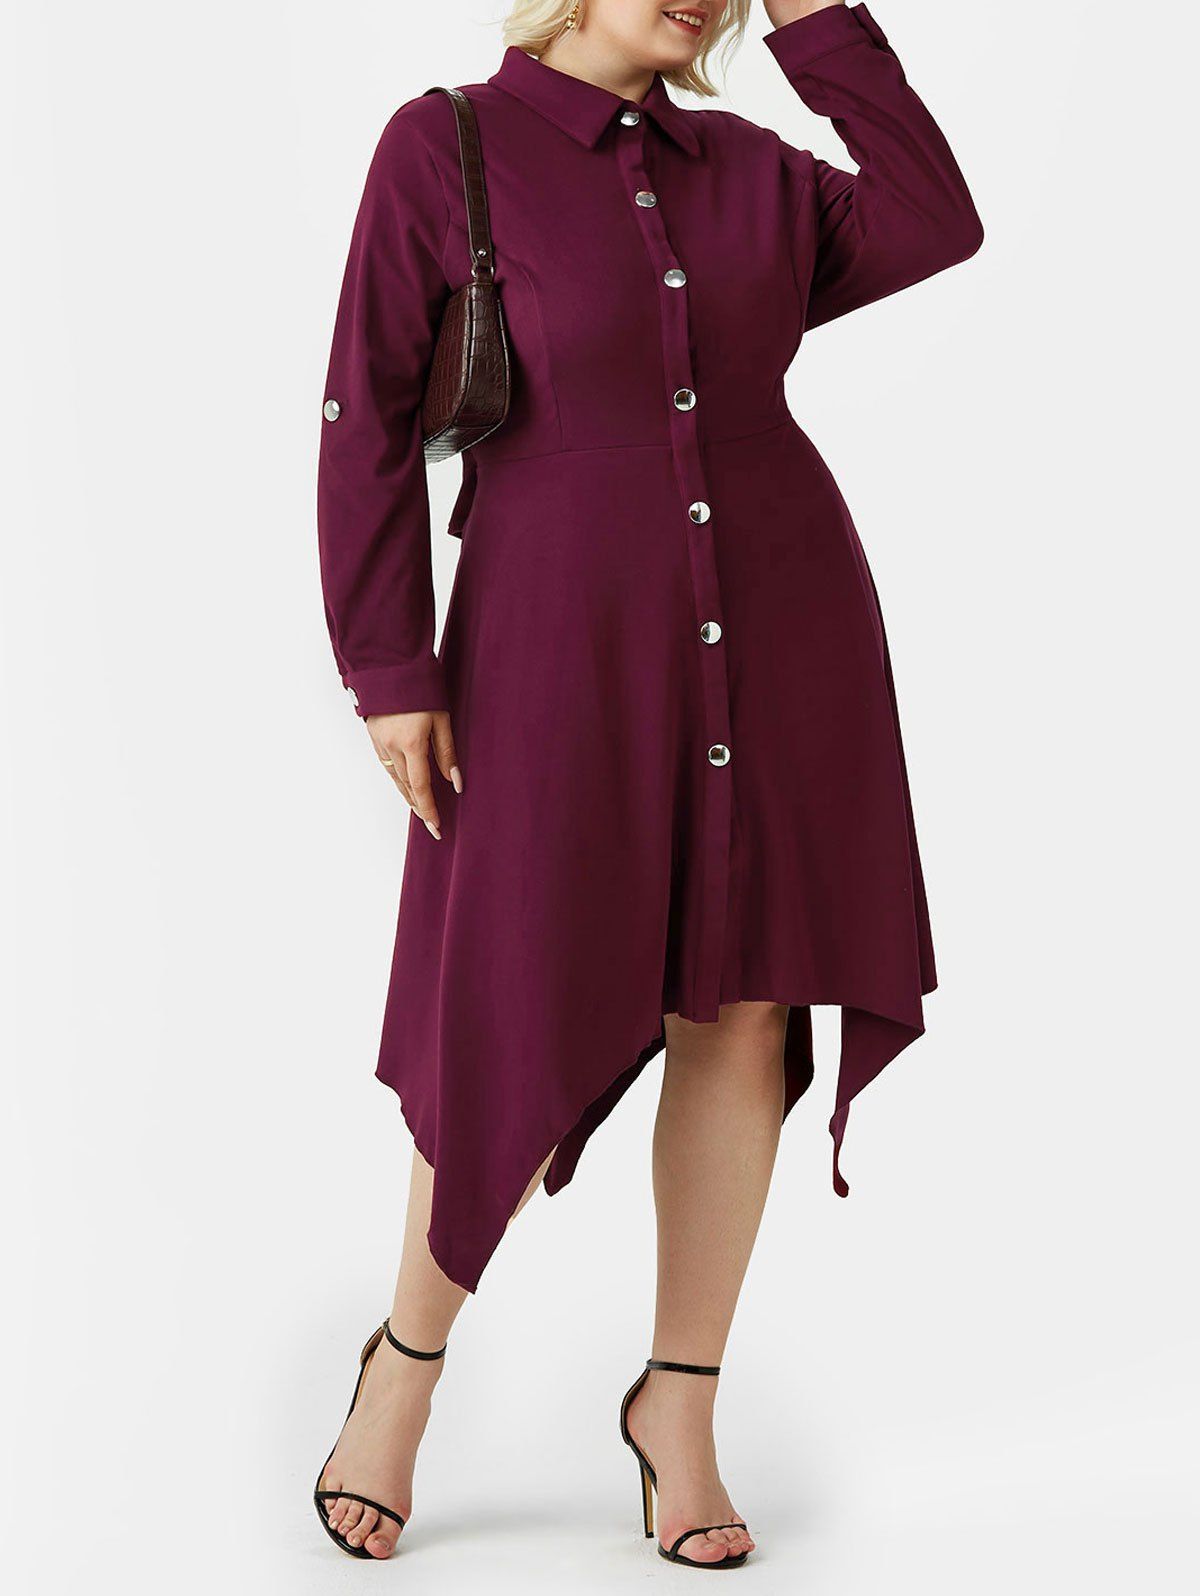 Unique Plus Size Roll Up Sleeve Button Up Handkerchief Dress  